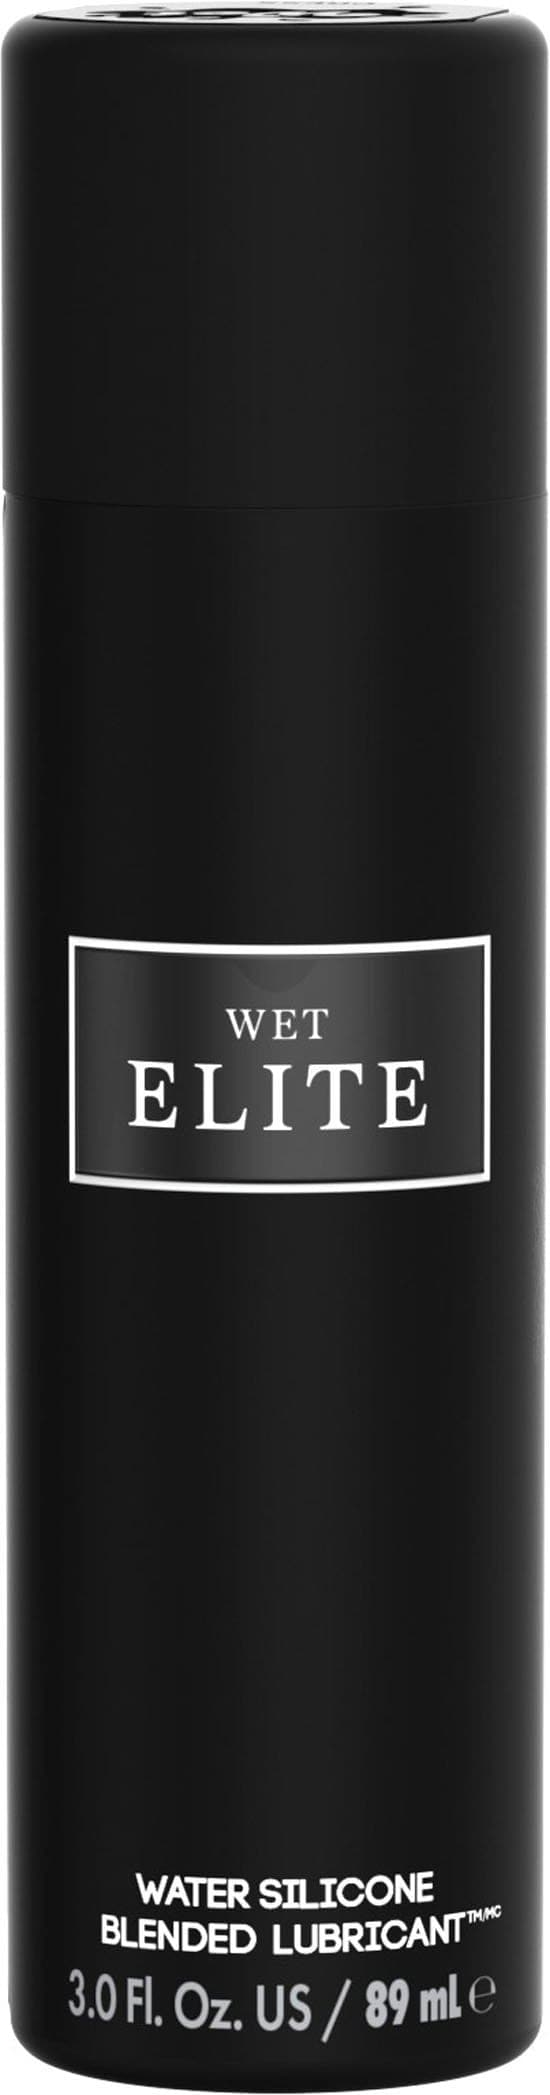 wet elite black 3 fl oz 89 ml